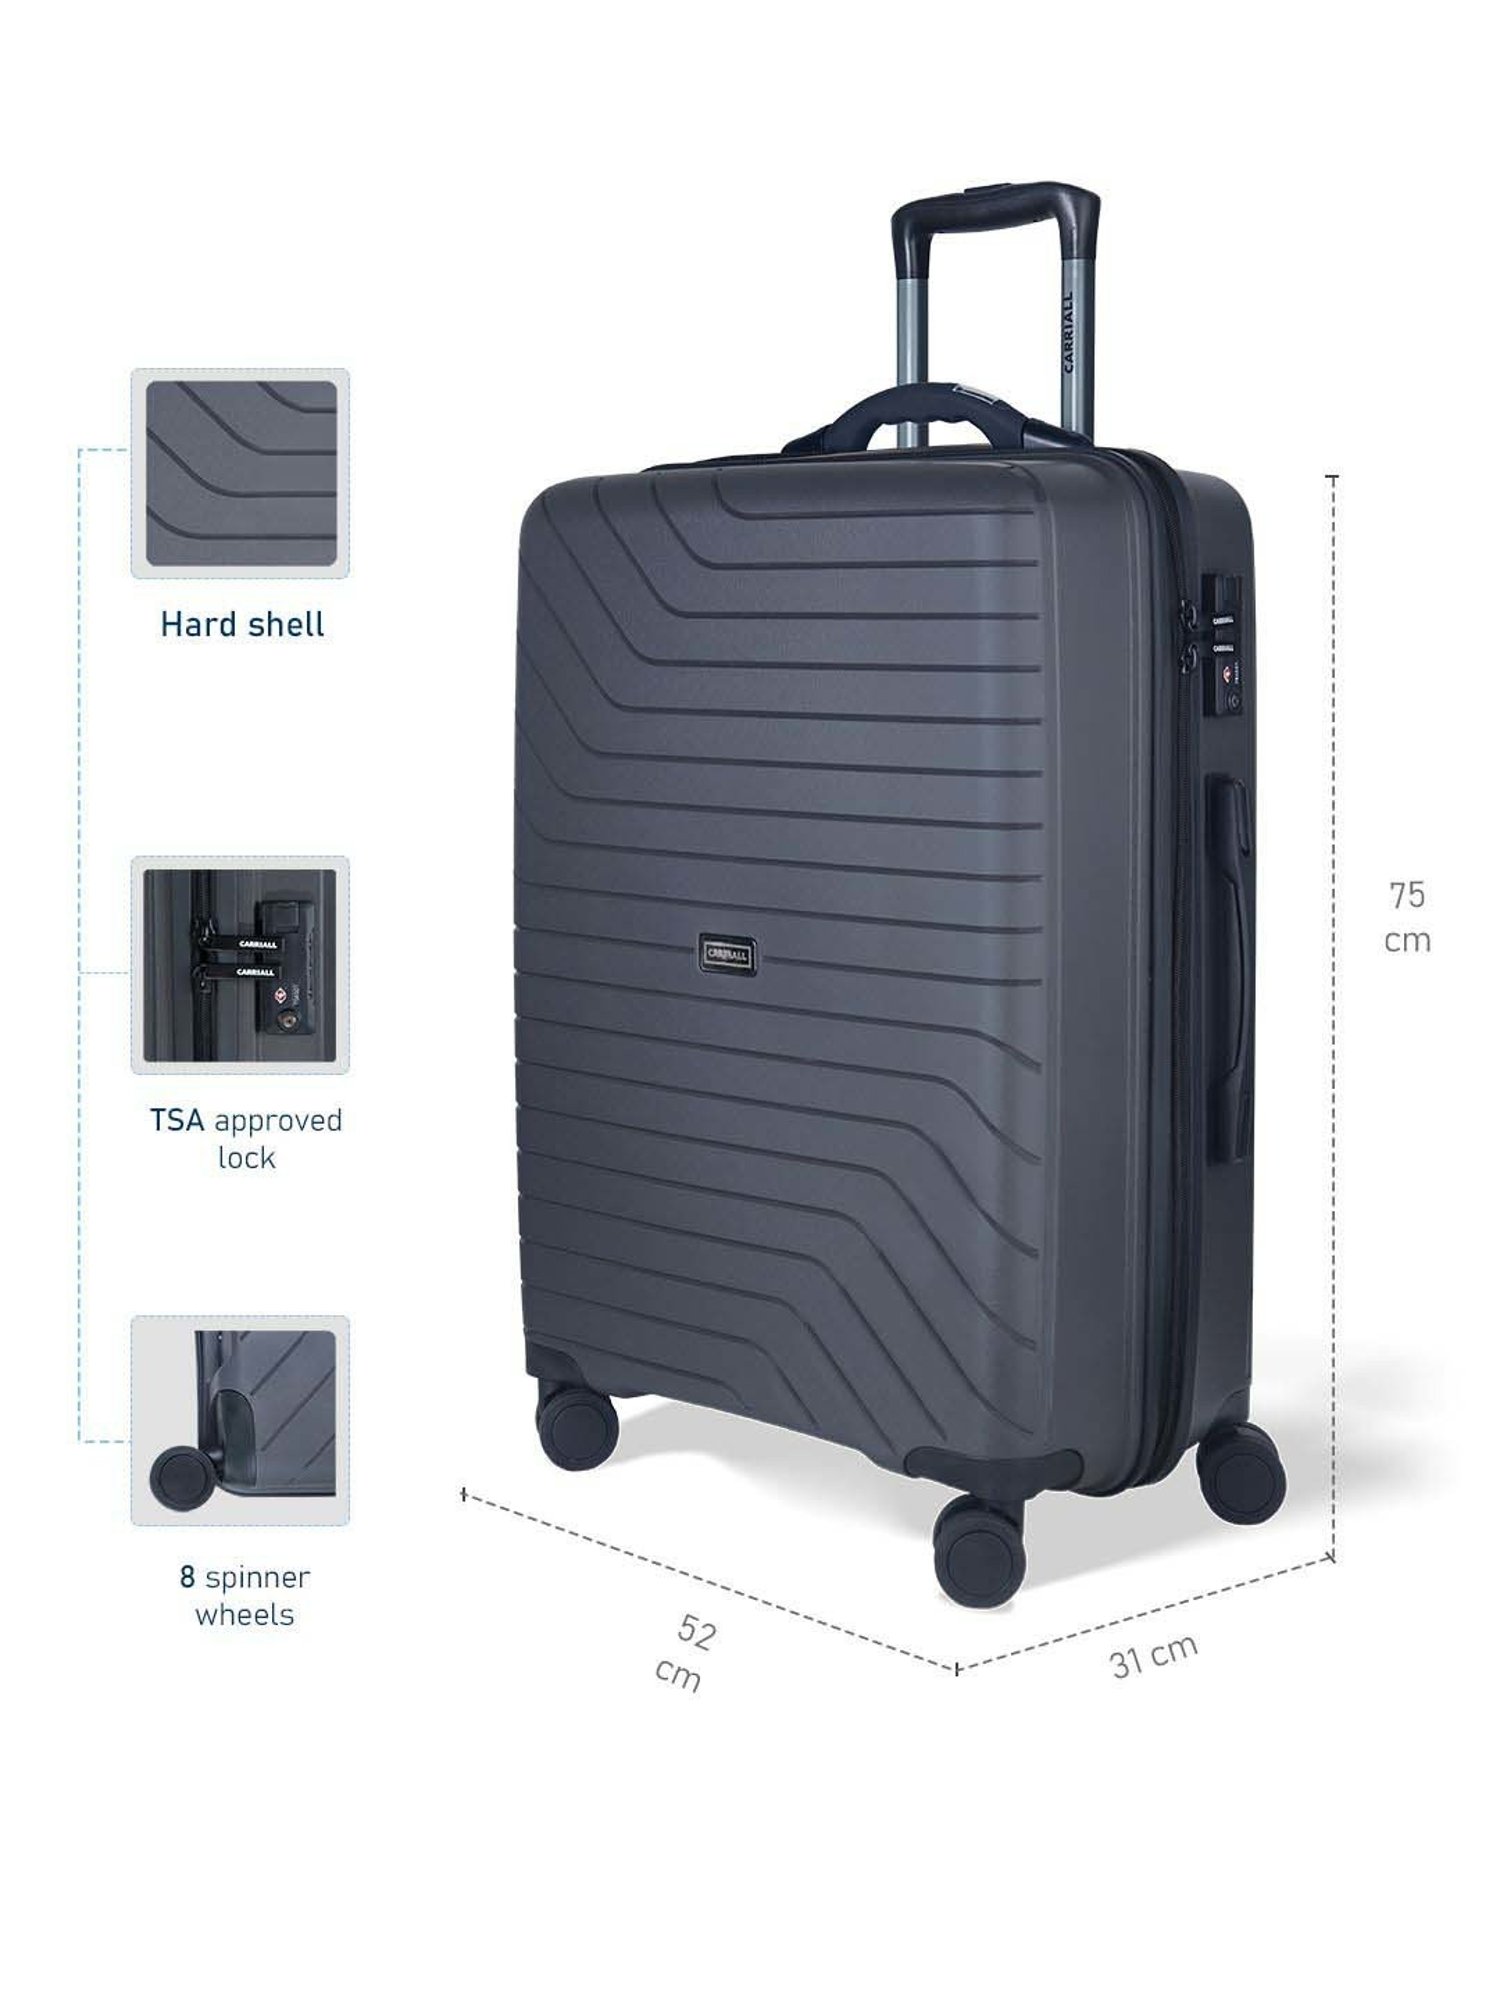 Groove Smart Luggage set of 2 | Trolley luggage | Travel luggage